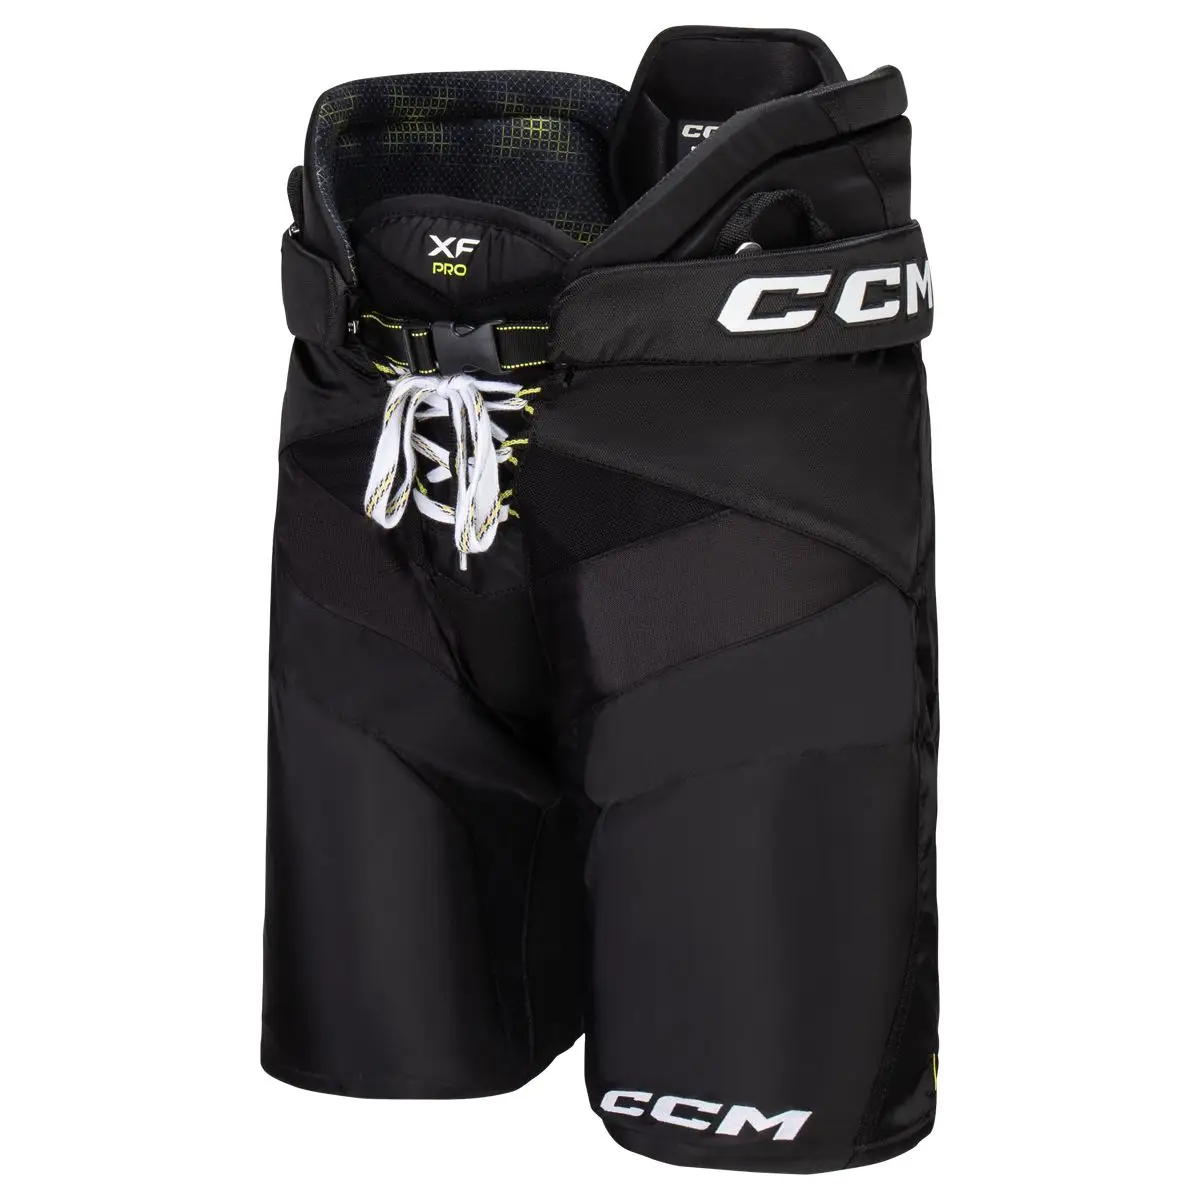 CCM Tacks XF Pro Senior Ice Hockey Pants